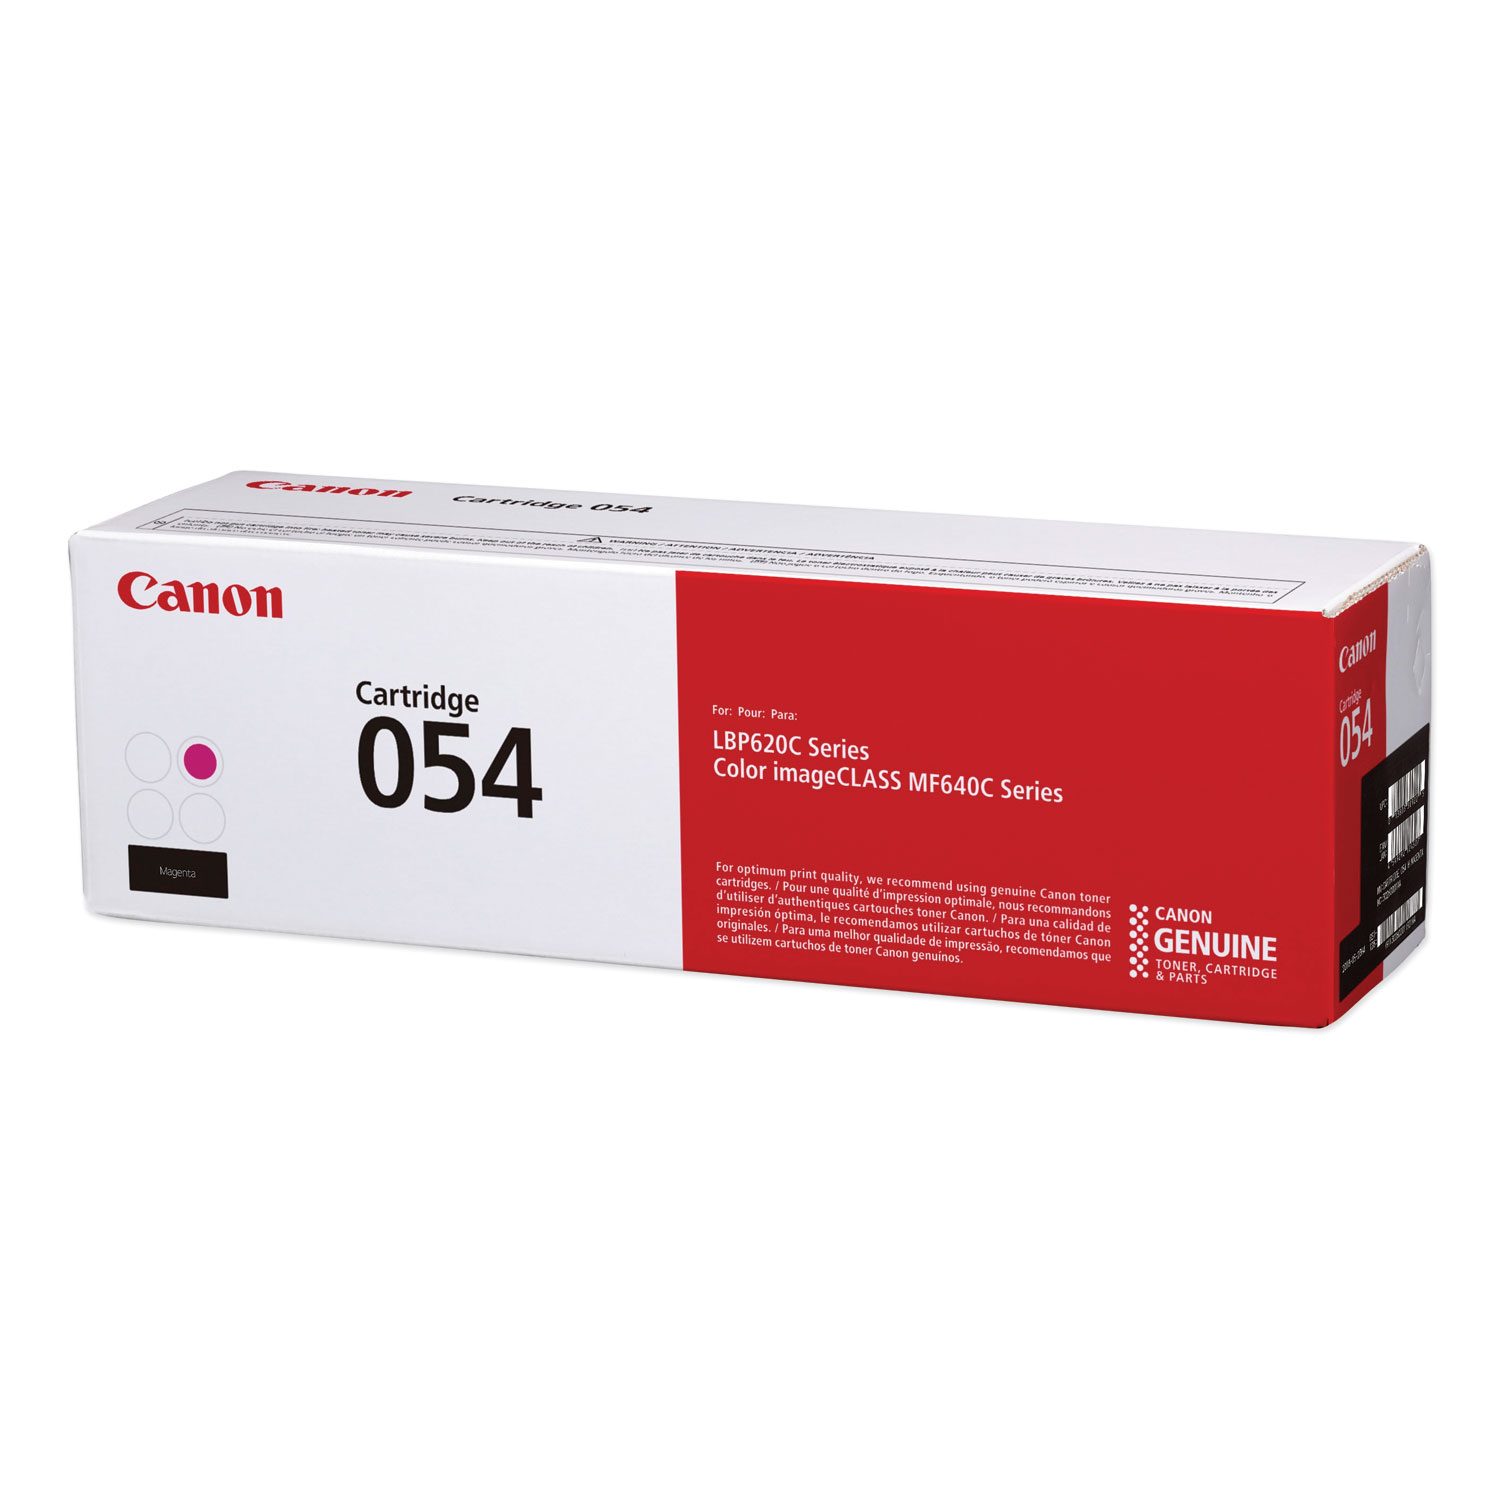  Canon 3022C001 3023C001 (054) Toner, 1,200 Page-Yield, Magenta (CNM3022C001) 